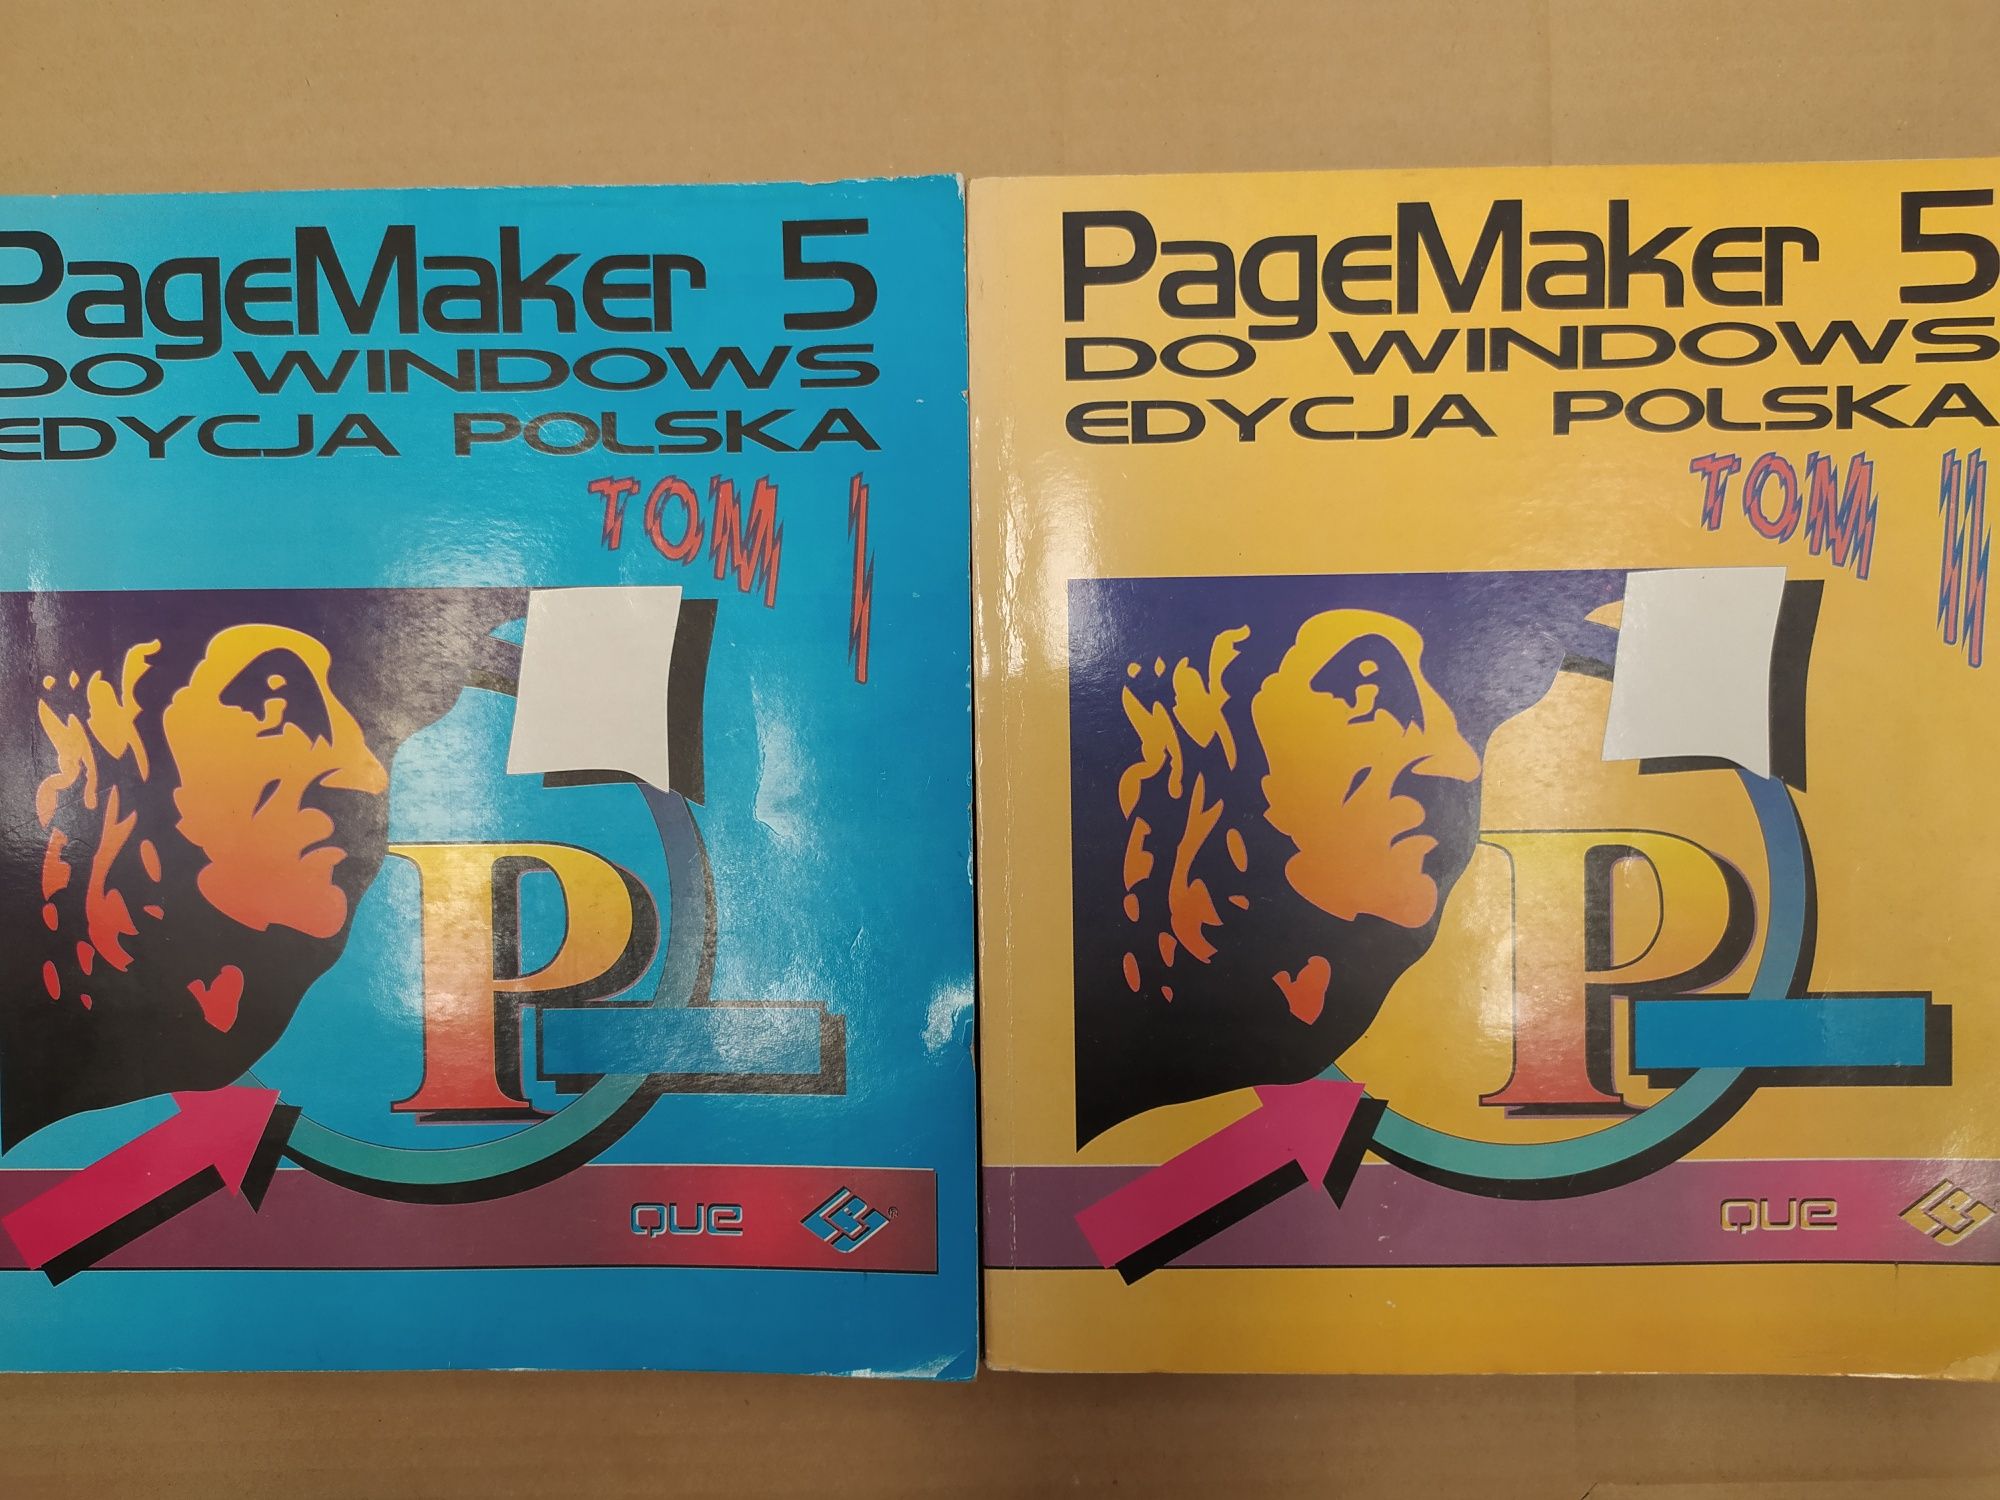 Pagemaker 5 do windows edycja polska tom 1-2 - Sharyn Venit